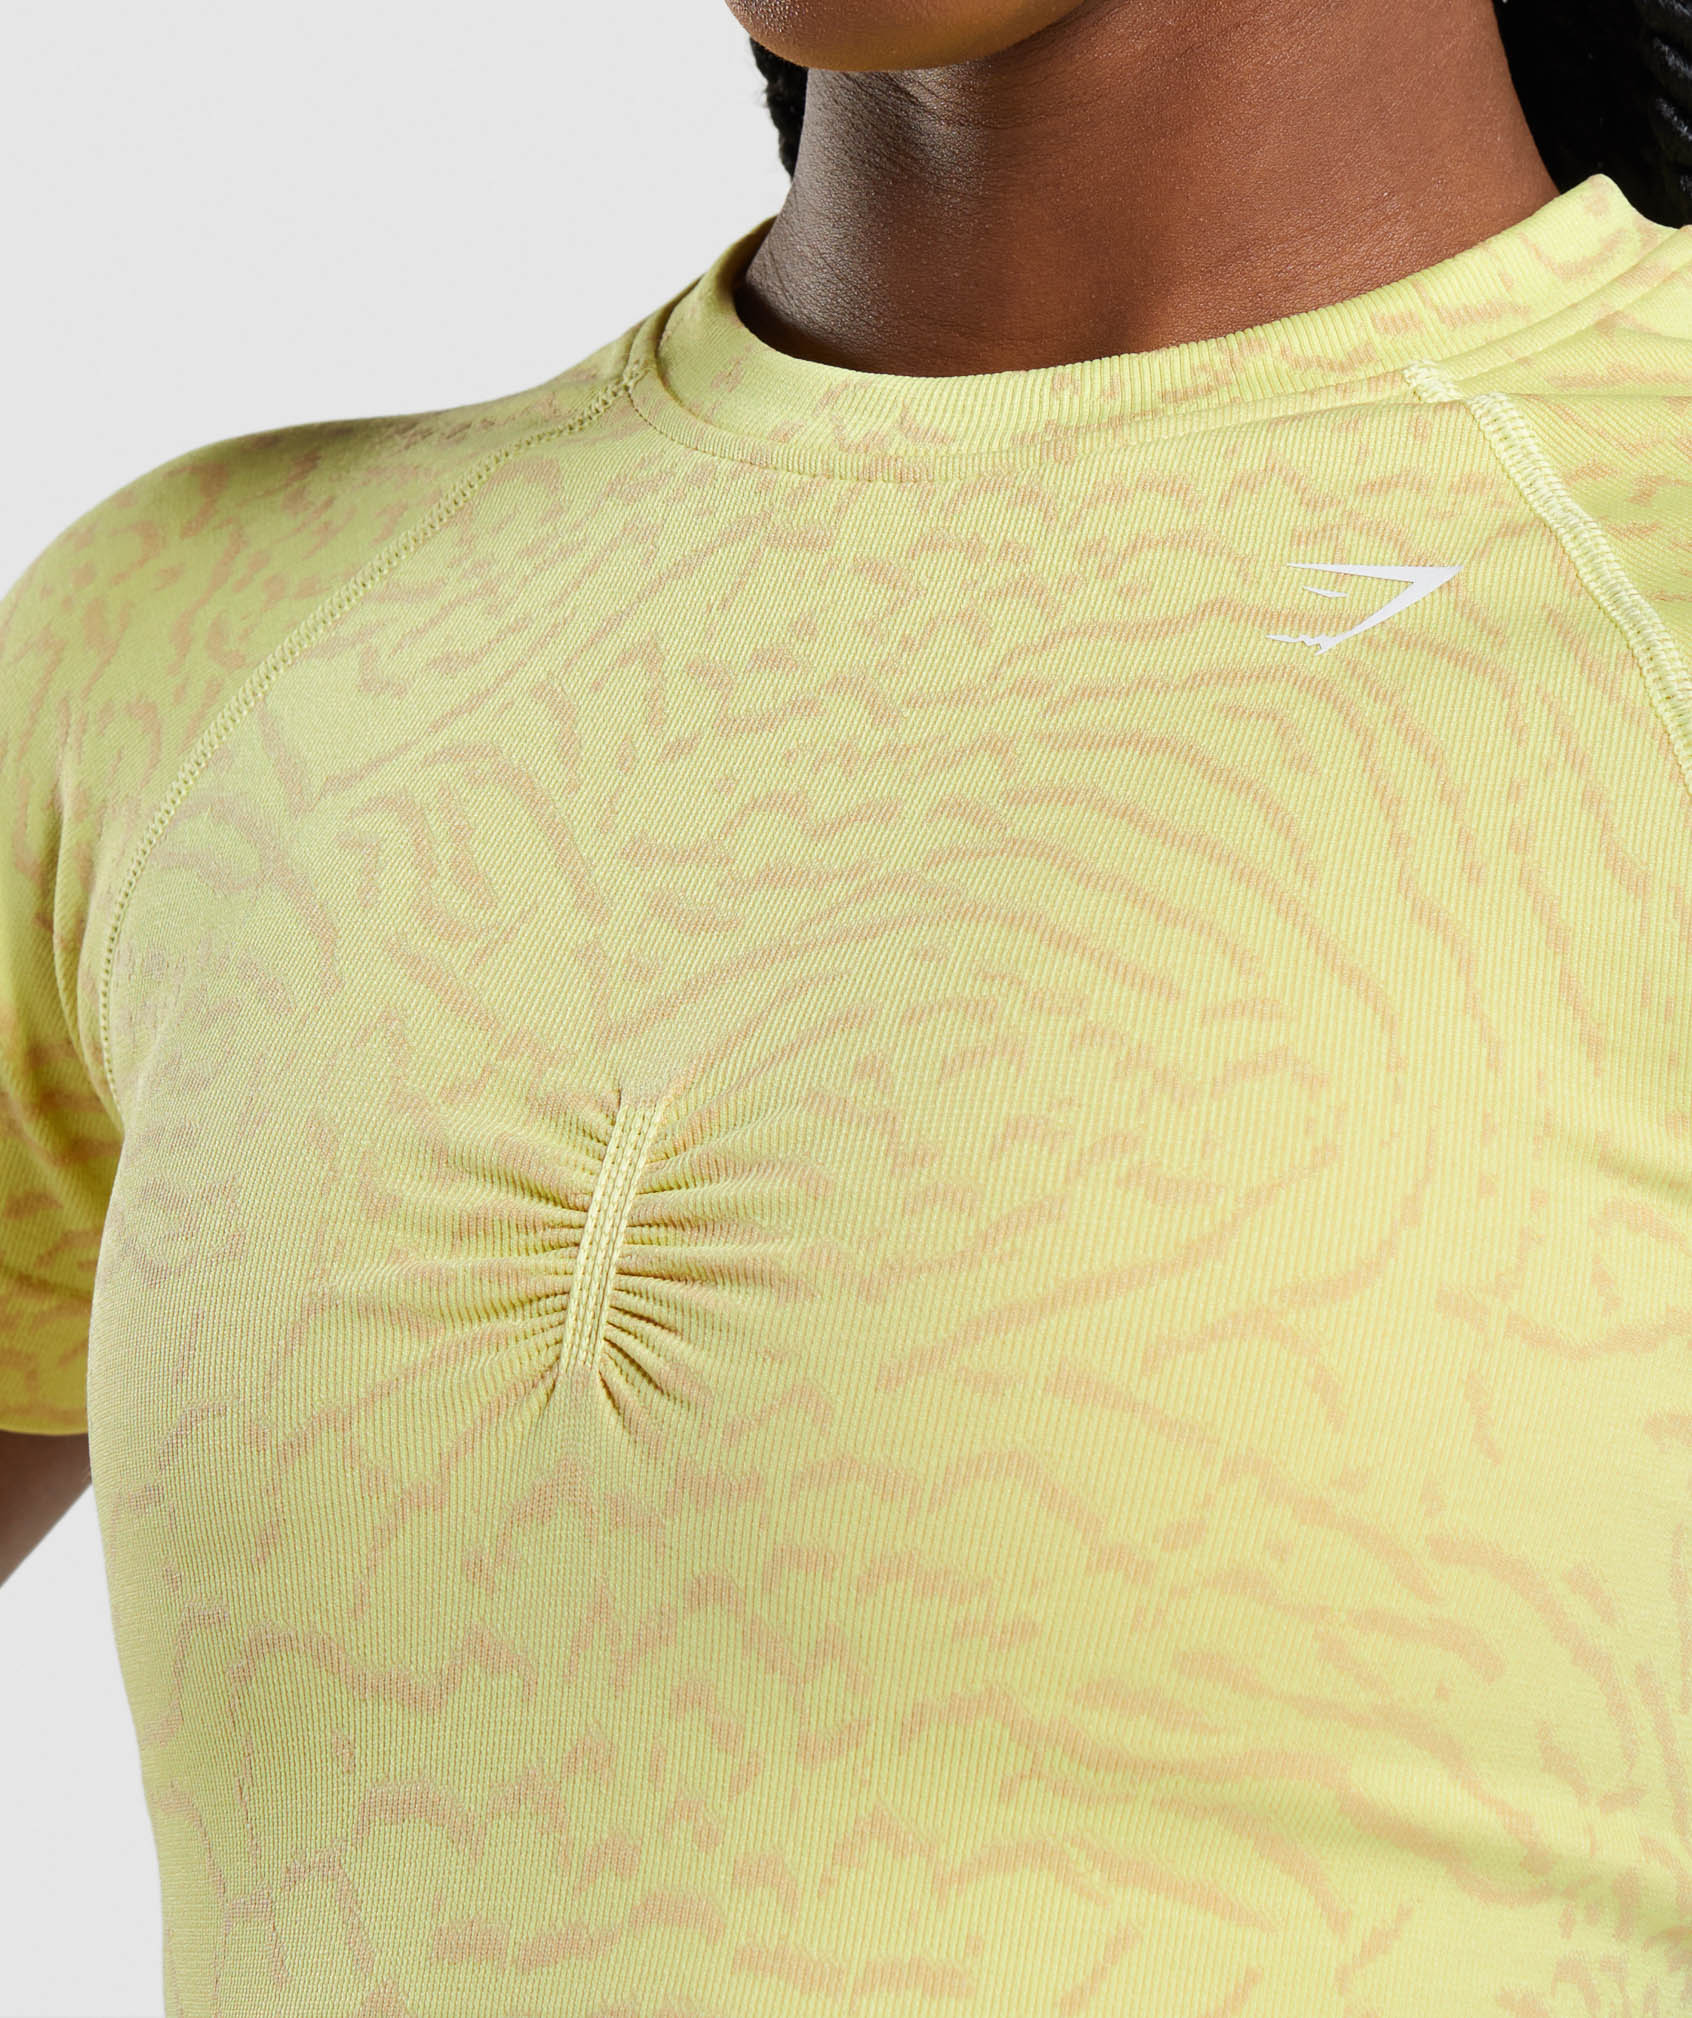 Adapt Animal Seamless T-Shirt in Firefly Yellow - view 6